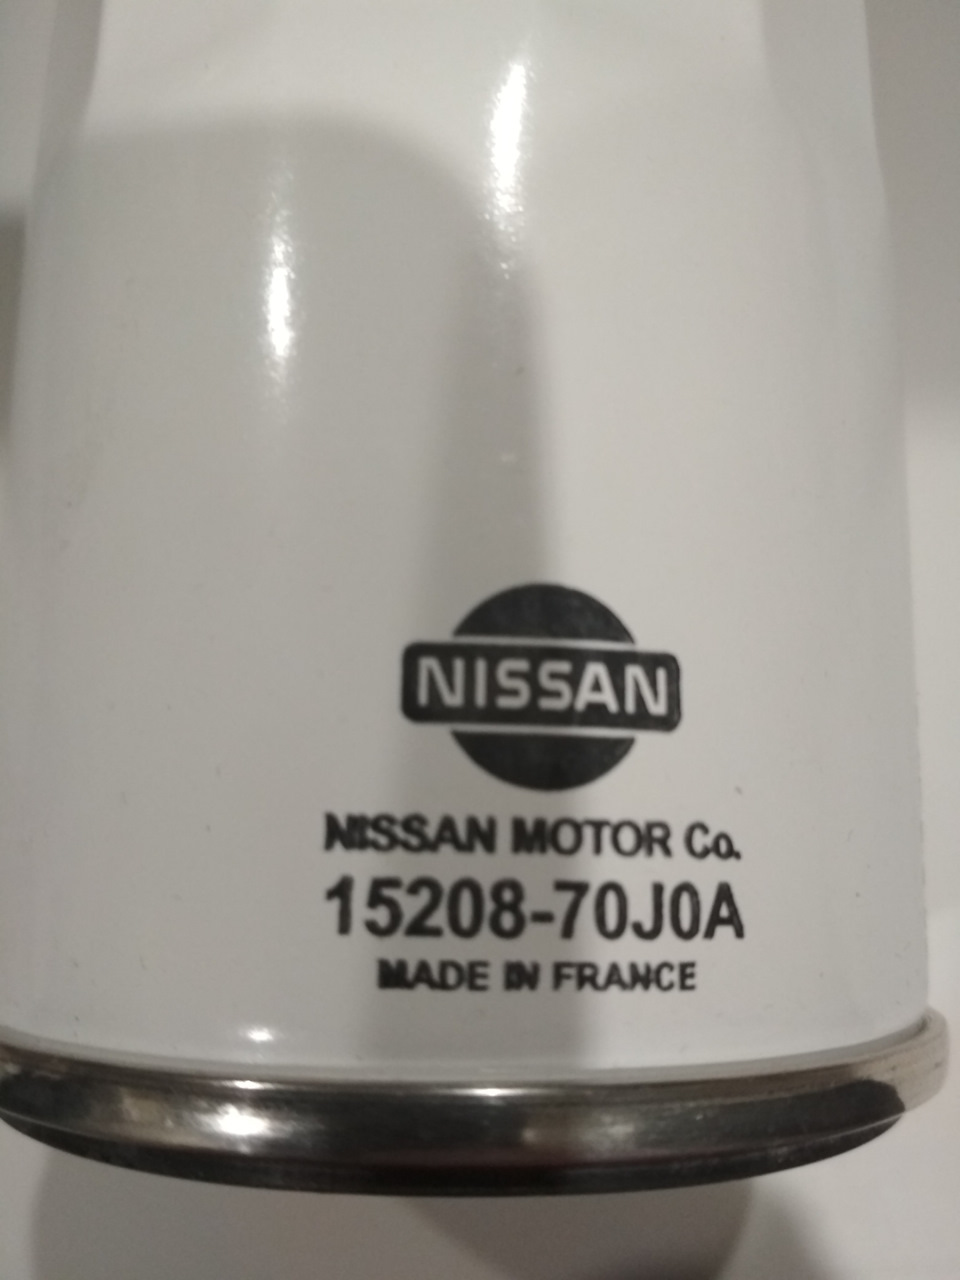 Фильтра ниссан ноут 1.4. Фильтр масляный Nissan 15208-70j0a. 1520870j0a. Nissan 1520870j0a. Nissan Note 1.4 масляный фильтр.